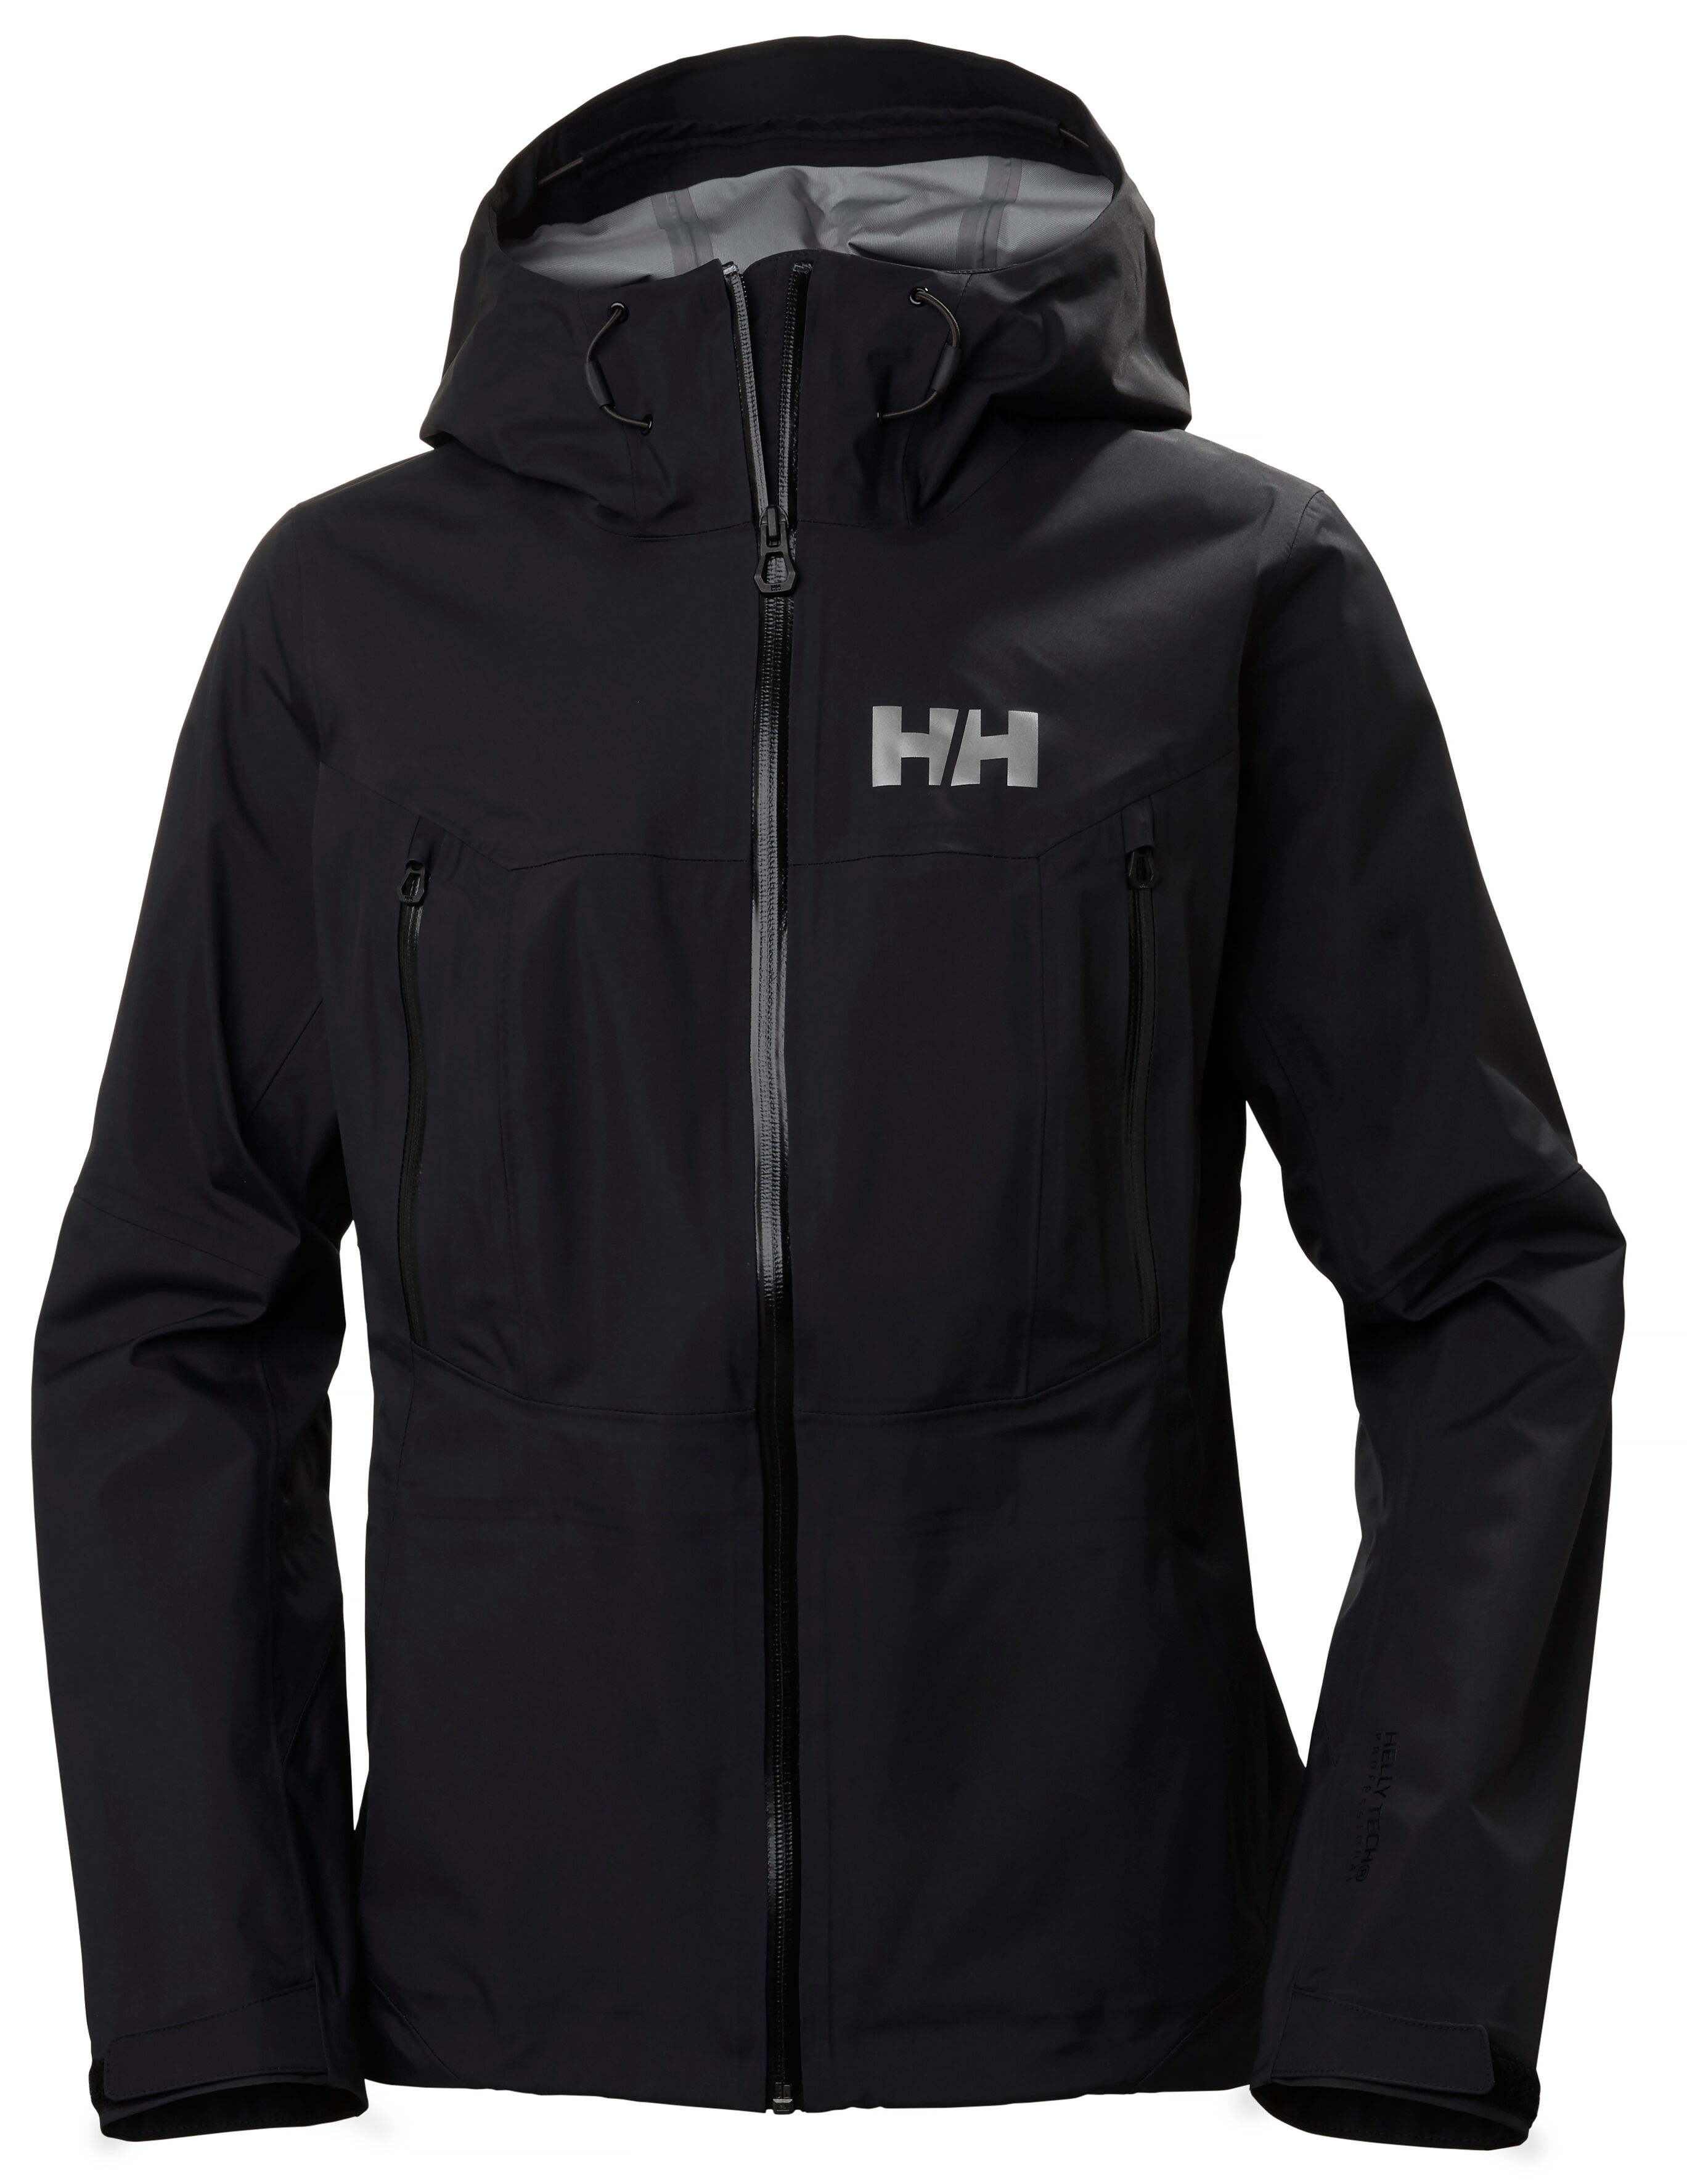 Helly Hansen Verglas 3L Shell Jacket - Hardshell jacket - Women's